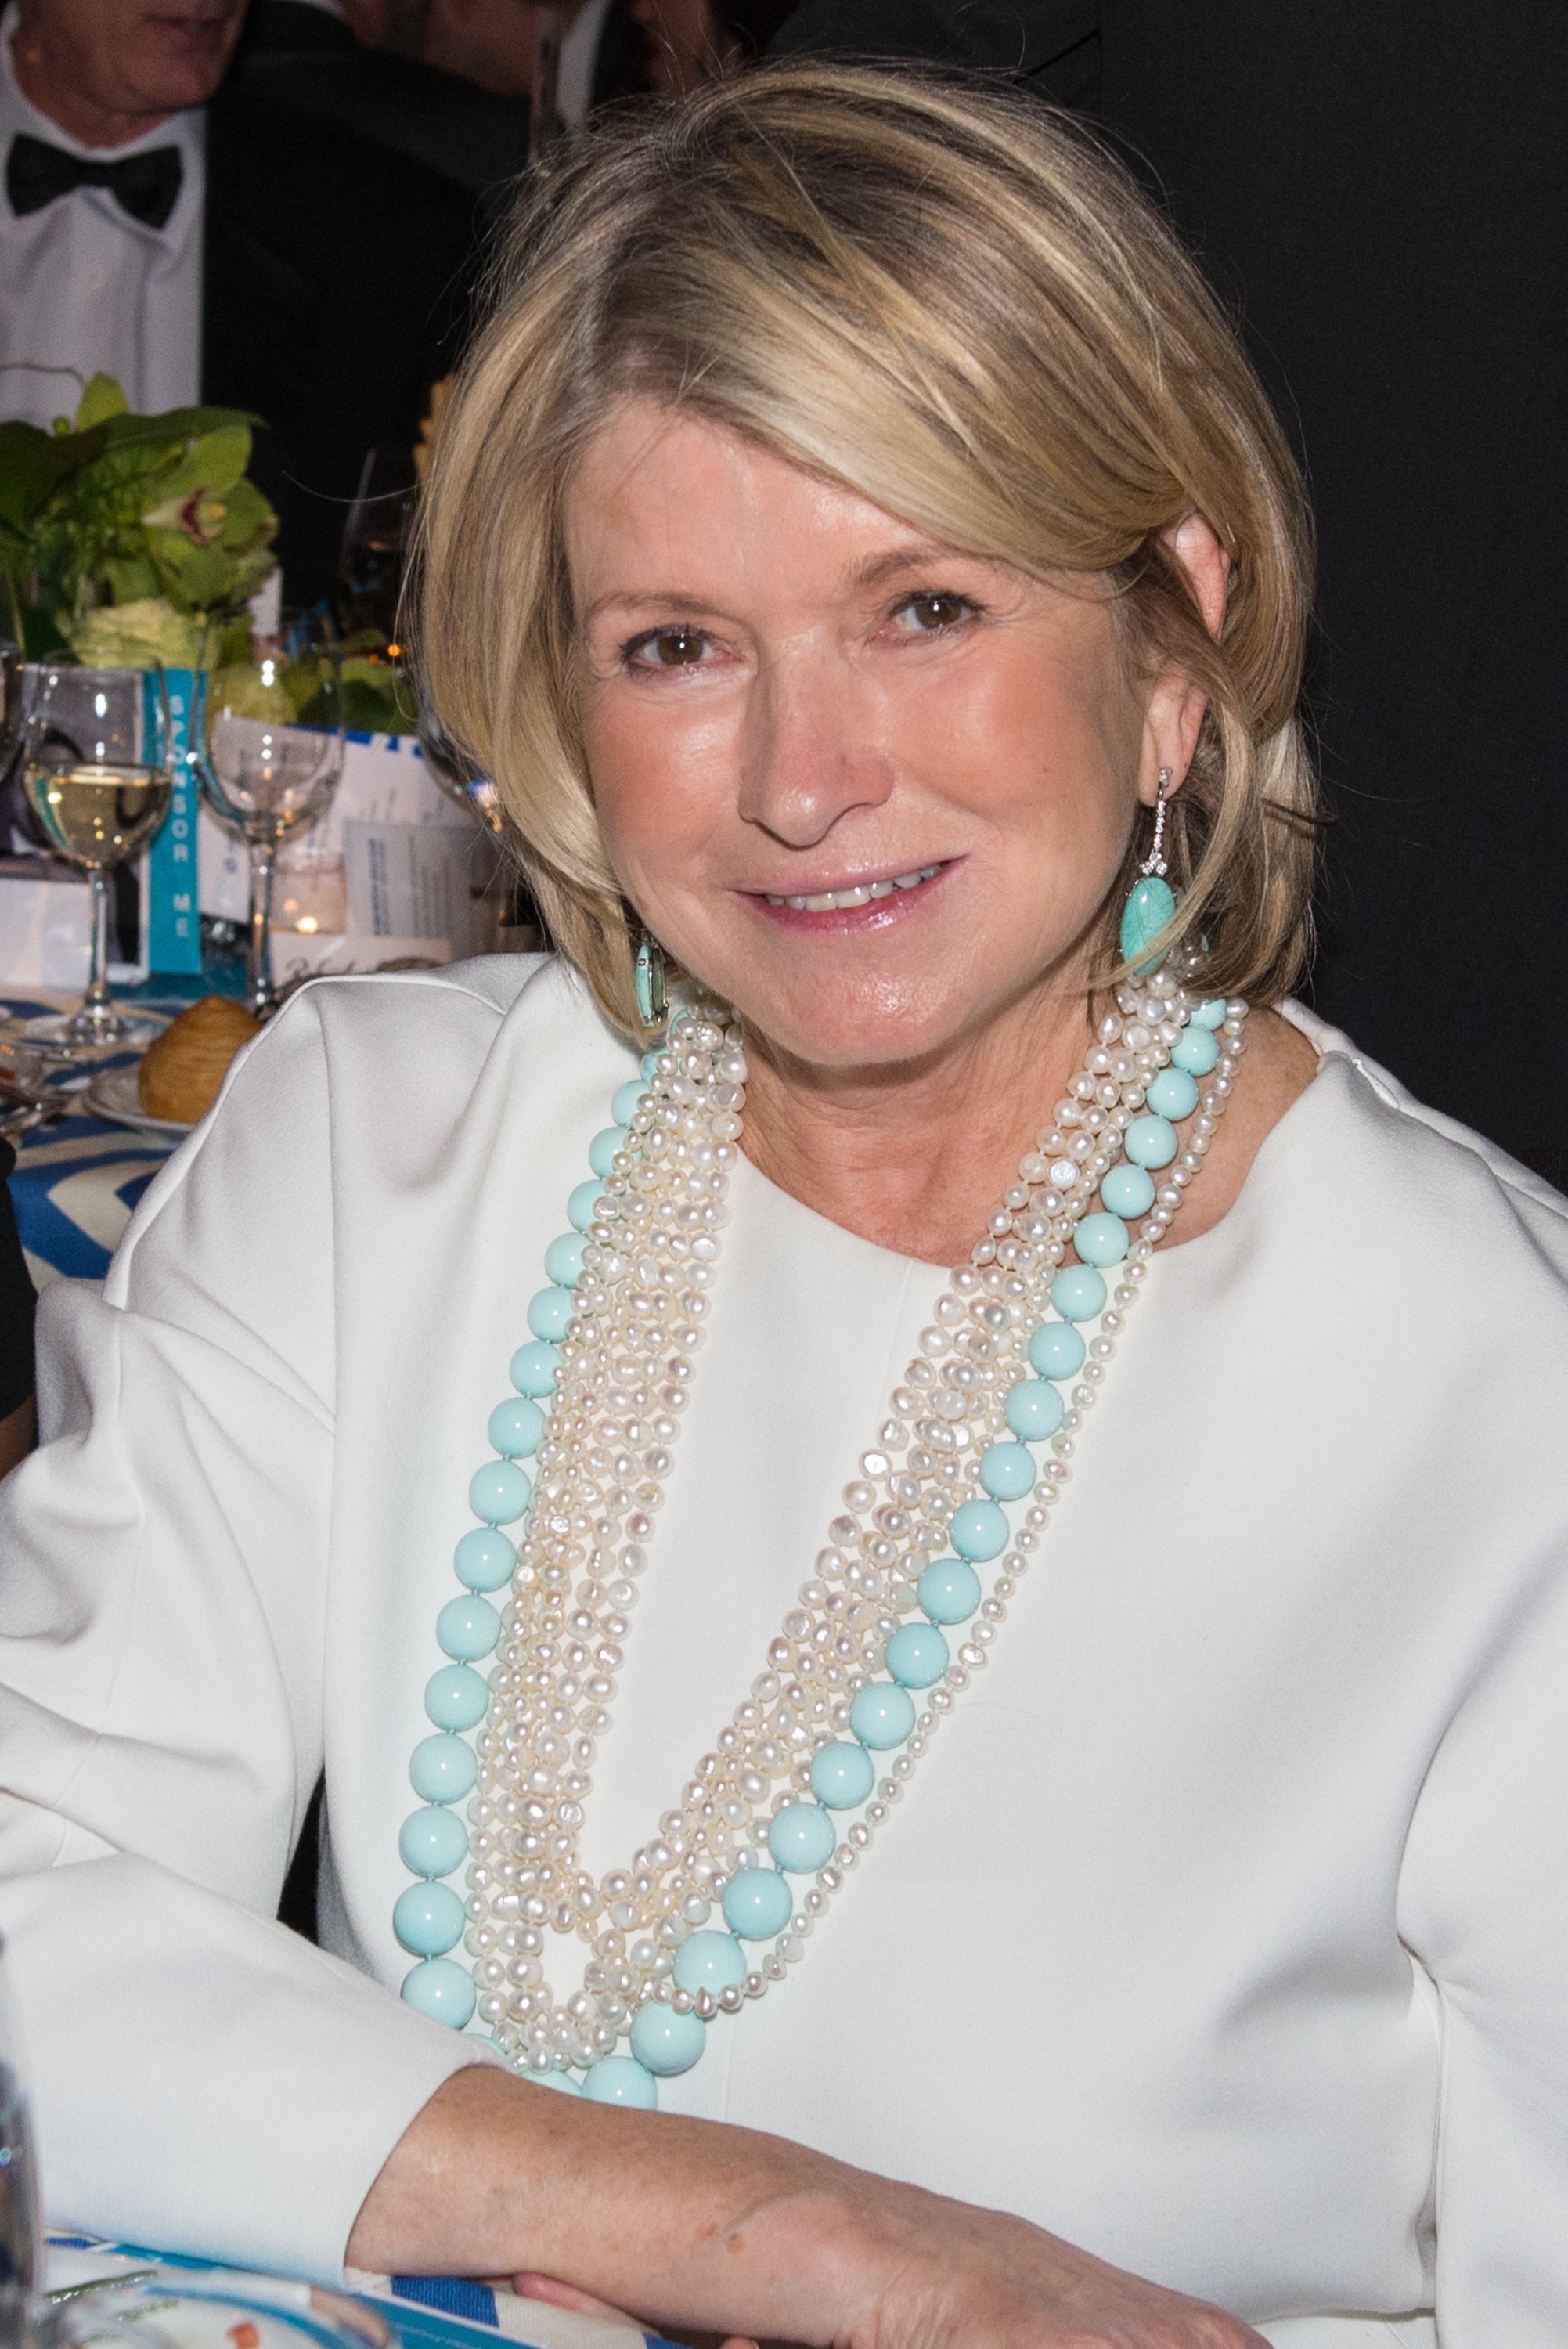 Martha Stewart at the Kips Bay Boys and Girls Club dinner (Photo: Patrick McMullan).